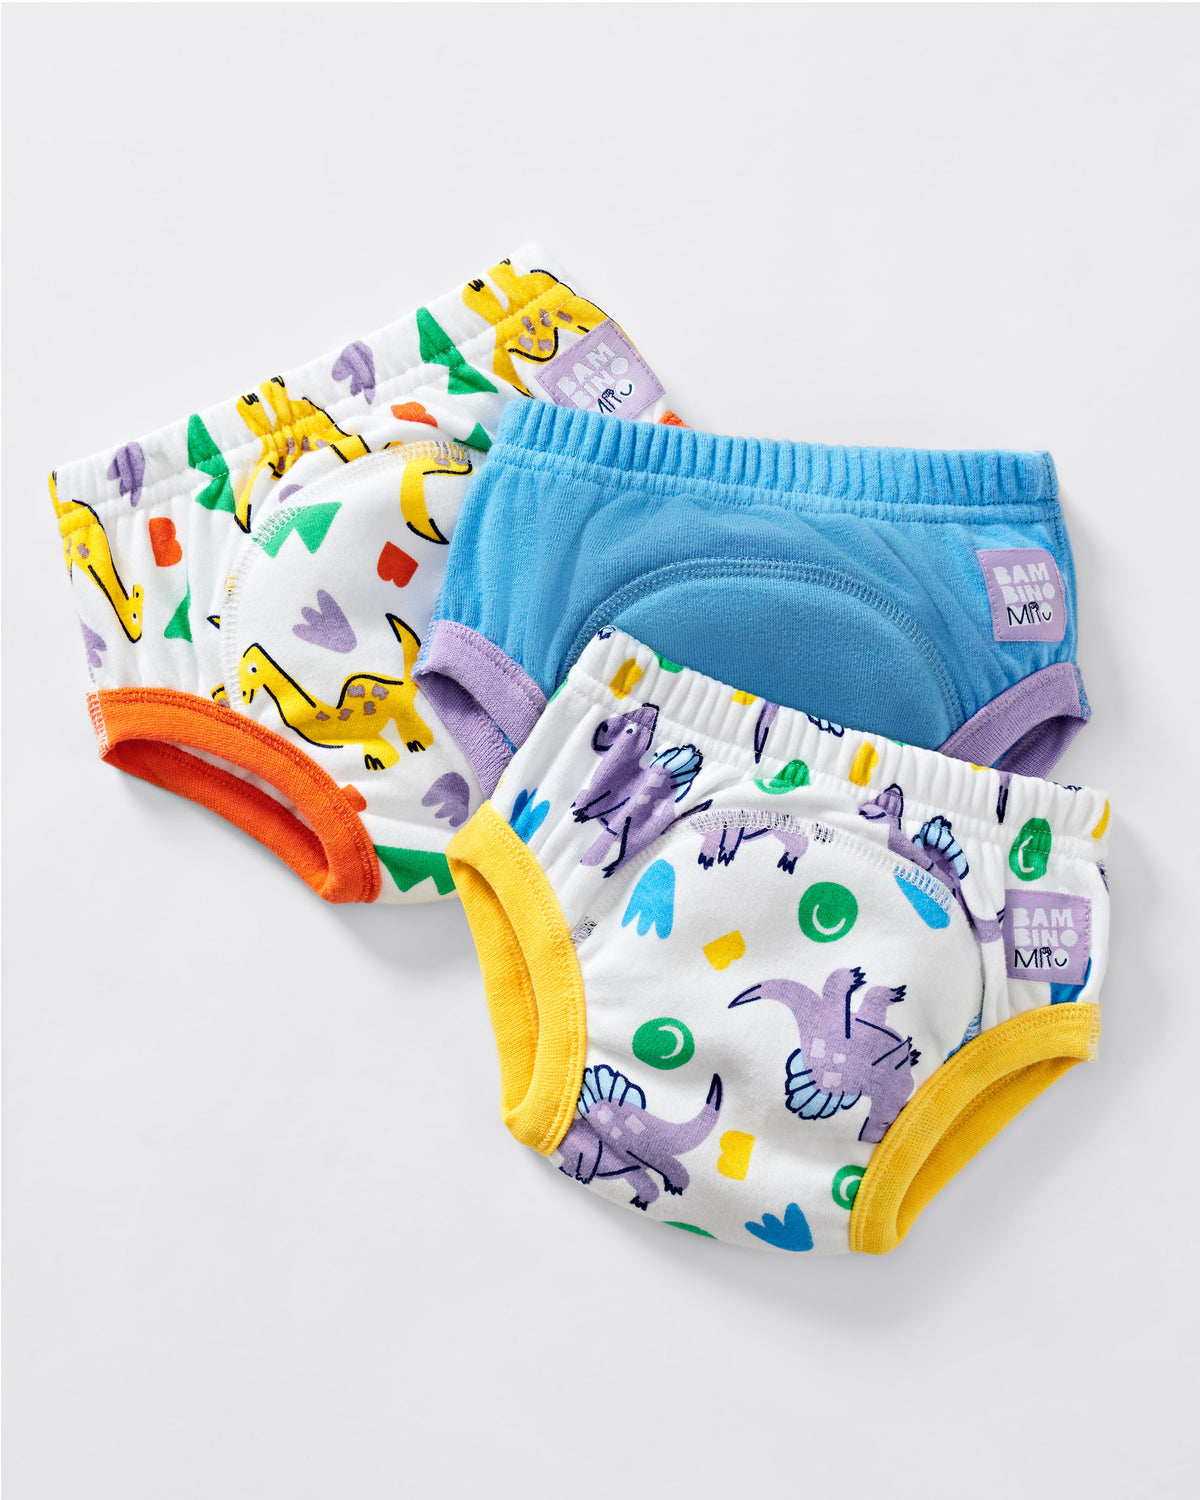 Revolutionary Reusable potty training pants, 3 pack - Bambino Mio (EU)